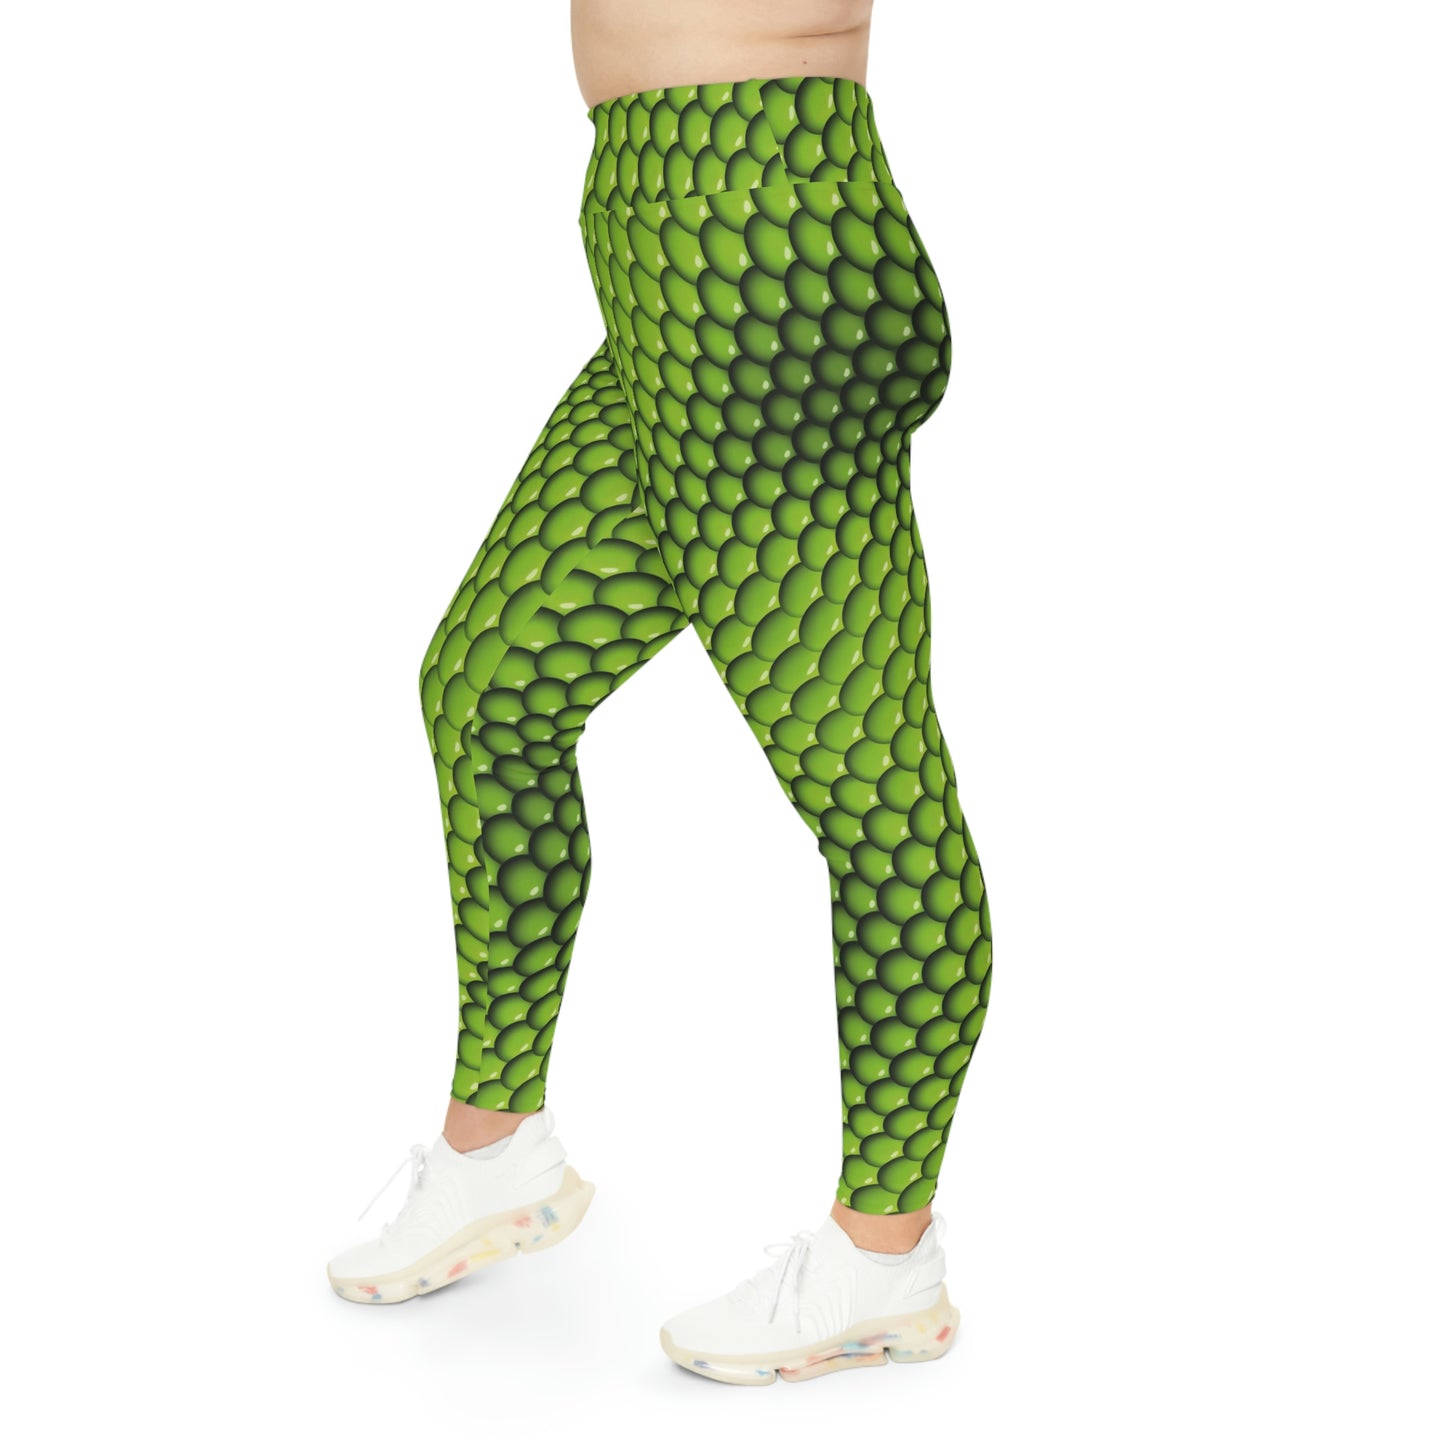 Lizard Plus Size Leggings, reptile fitness apparel, animal print casual outfit, Peach lift leggings, Plus Size Leggings